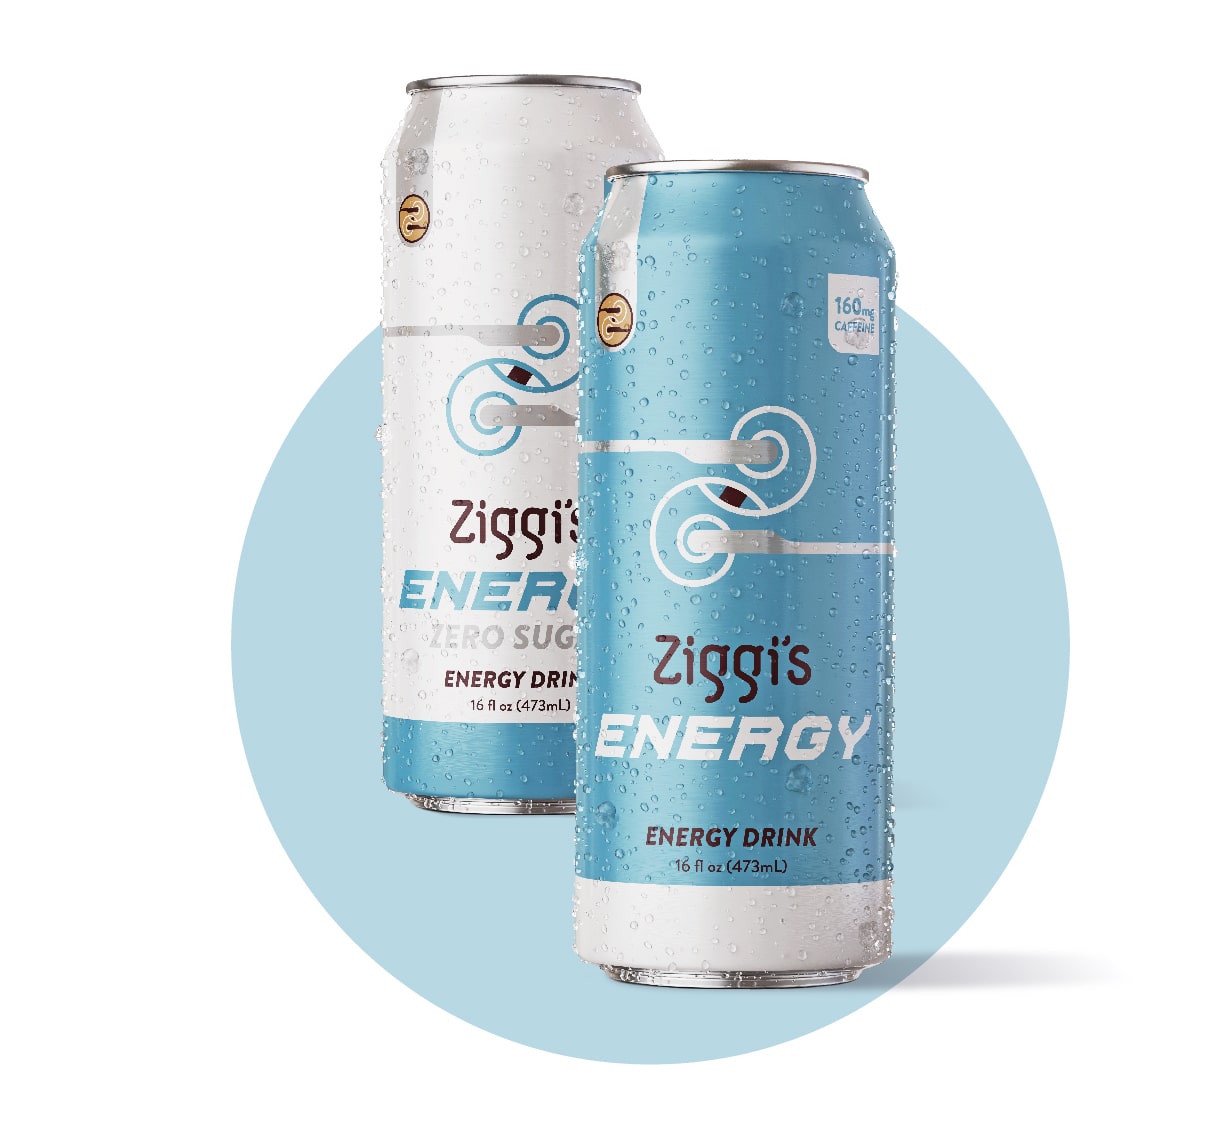 Image 2 Ziggi's Energy Drinks in cans - regular and Zero Sugar